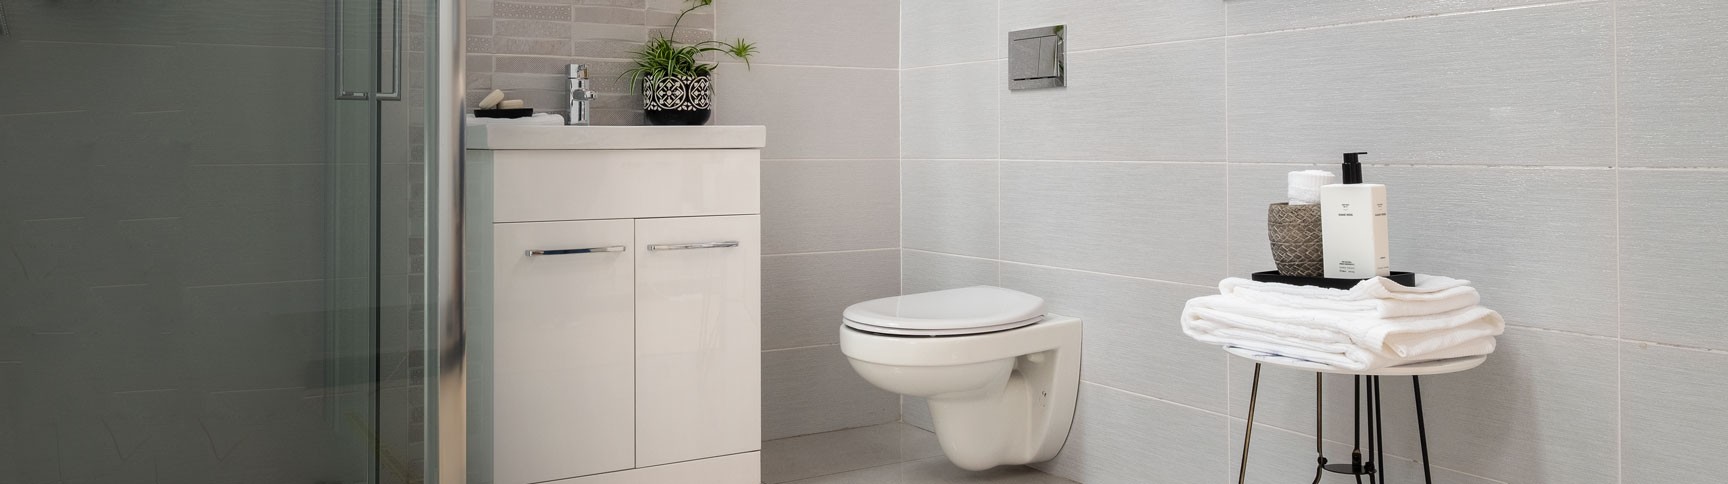 Toilet Seats | World of Tiles, Bathrooms & Wood Flooring